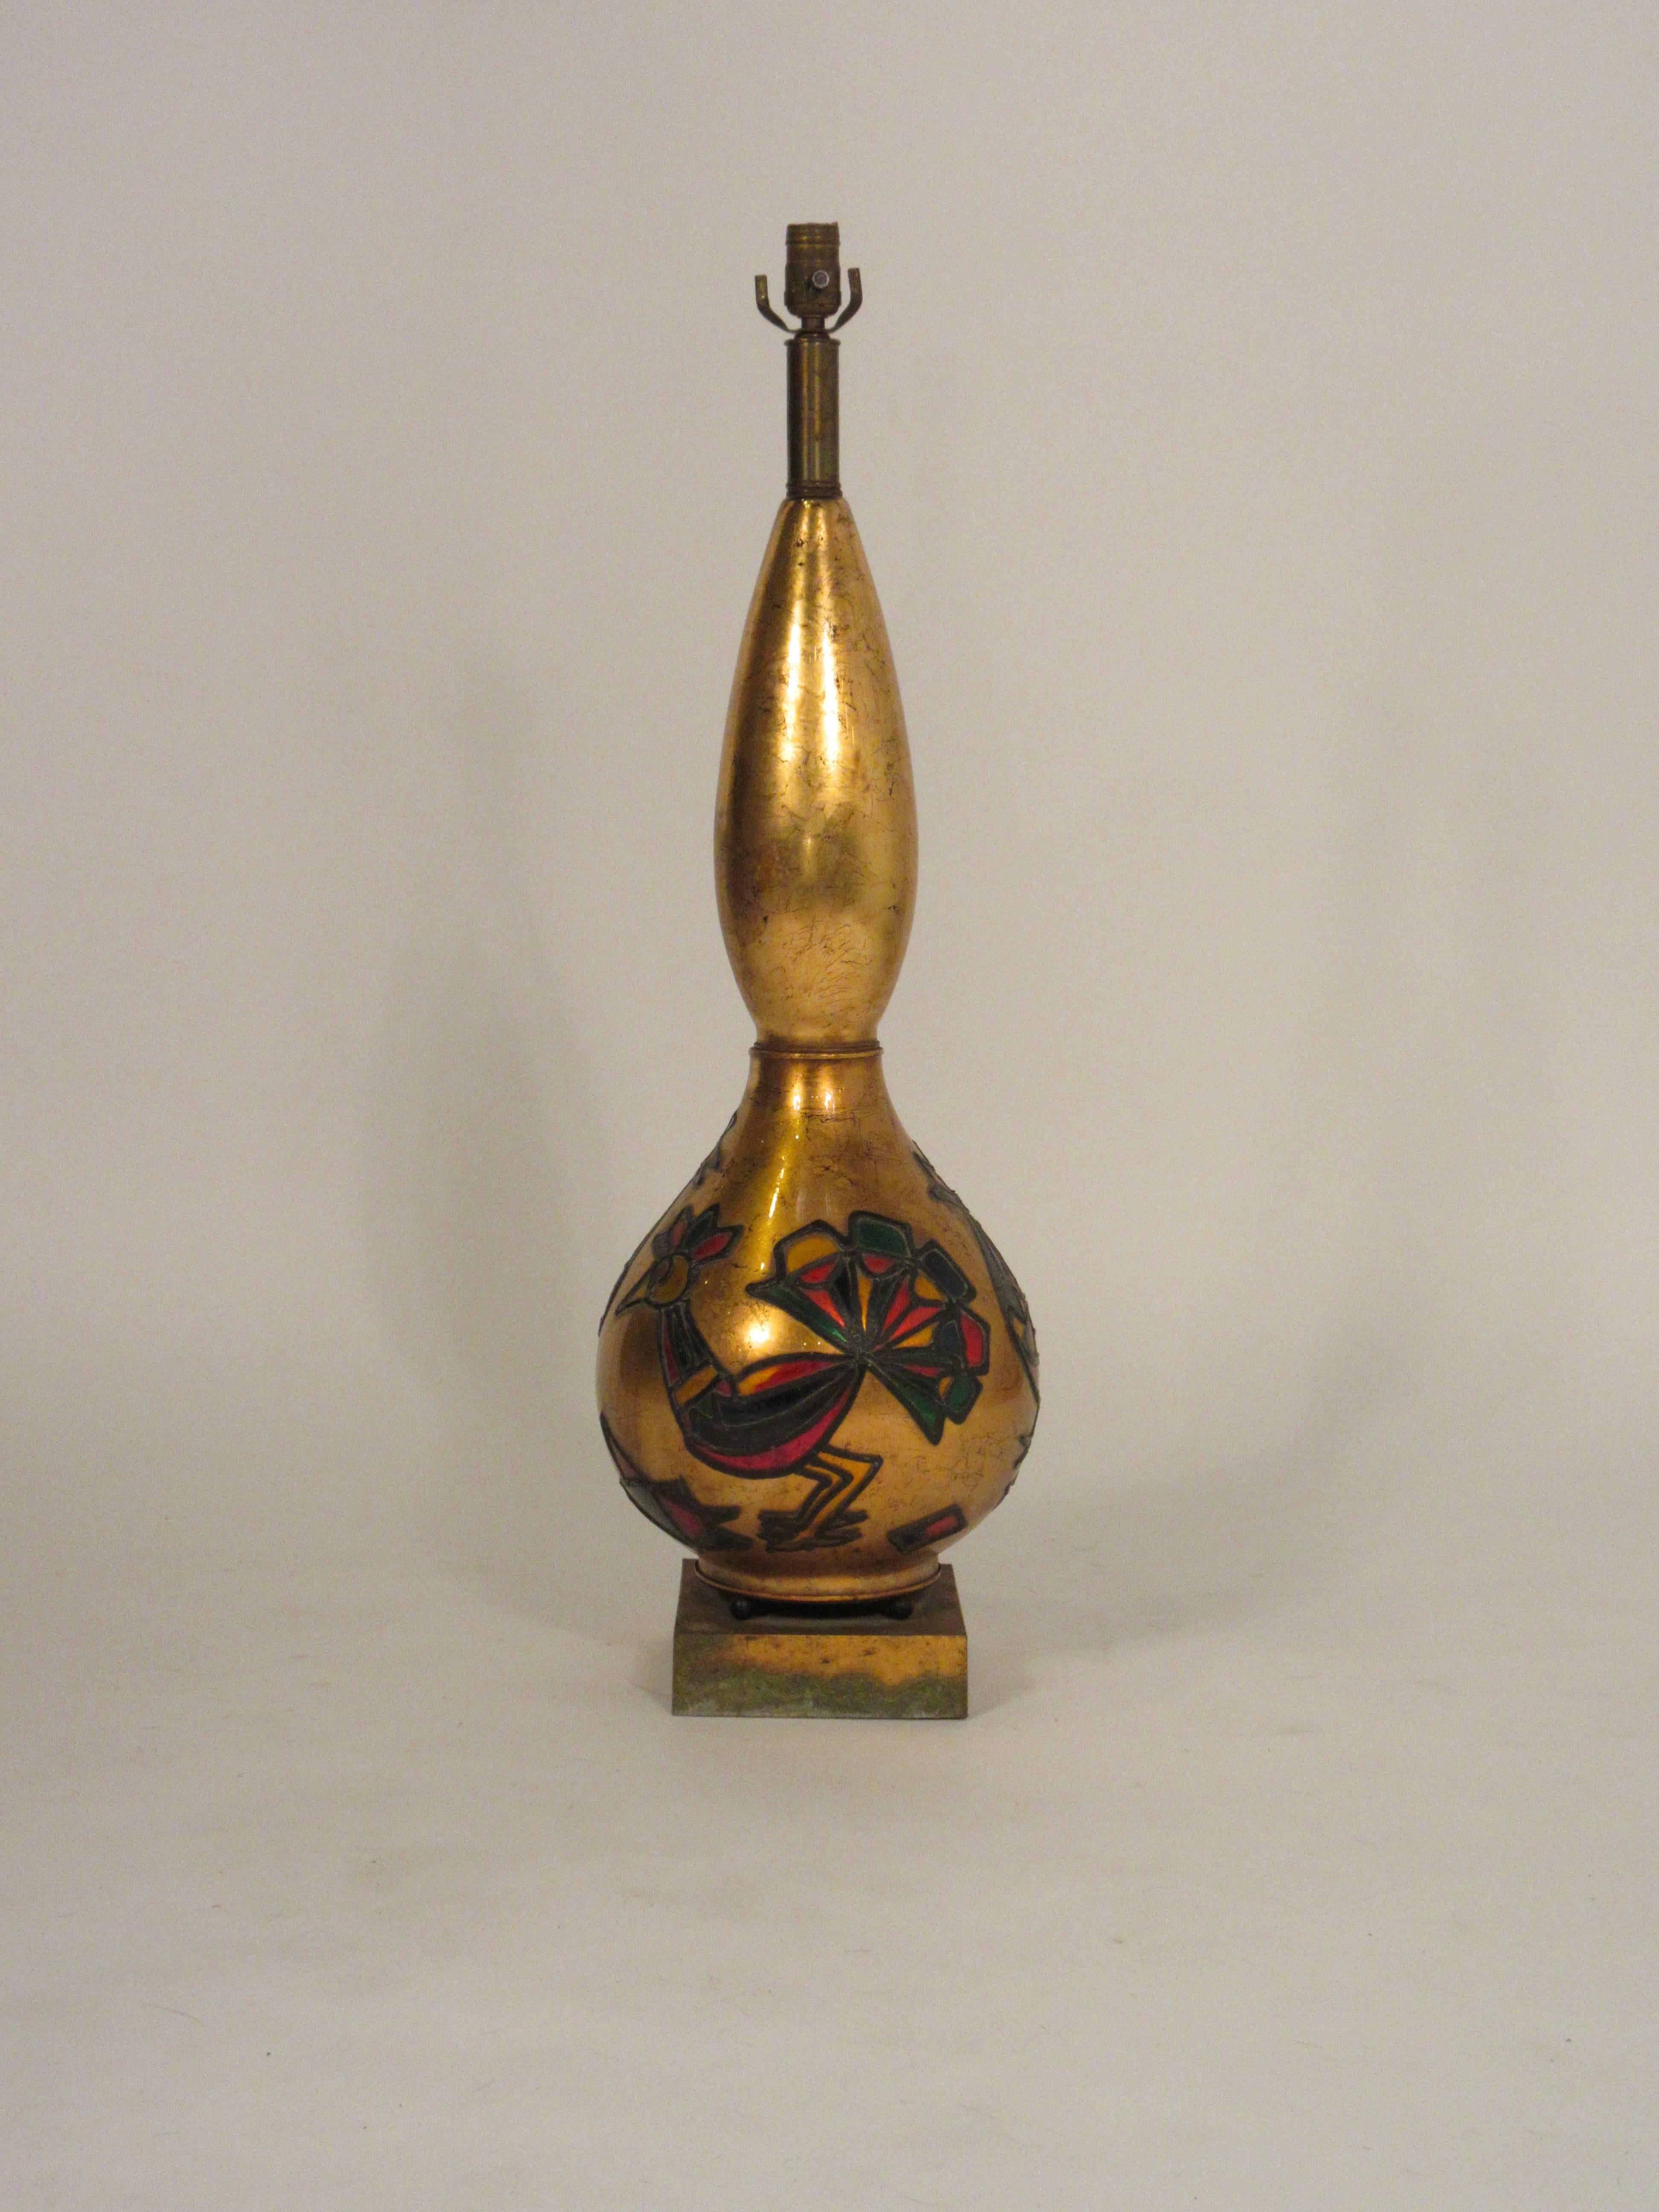 Unique 1950s very tall gilt egloisme peacock lamp, on gilt metal base.